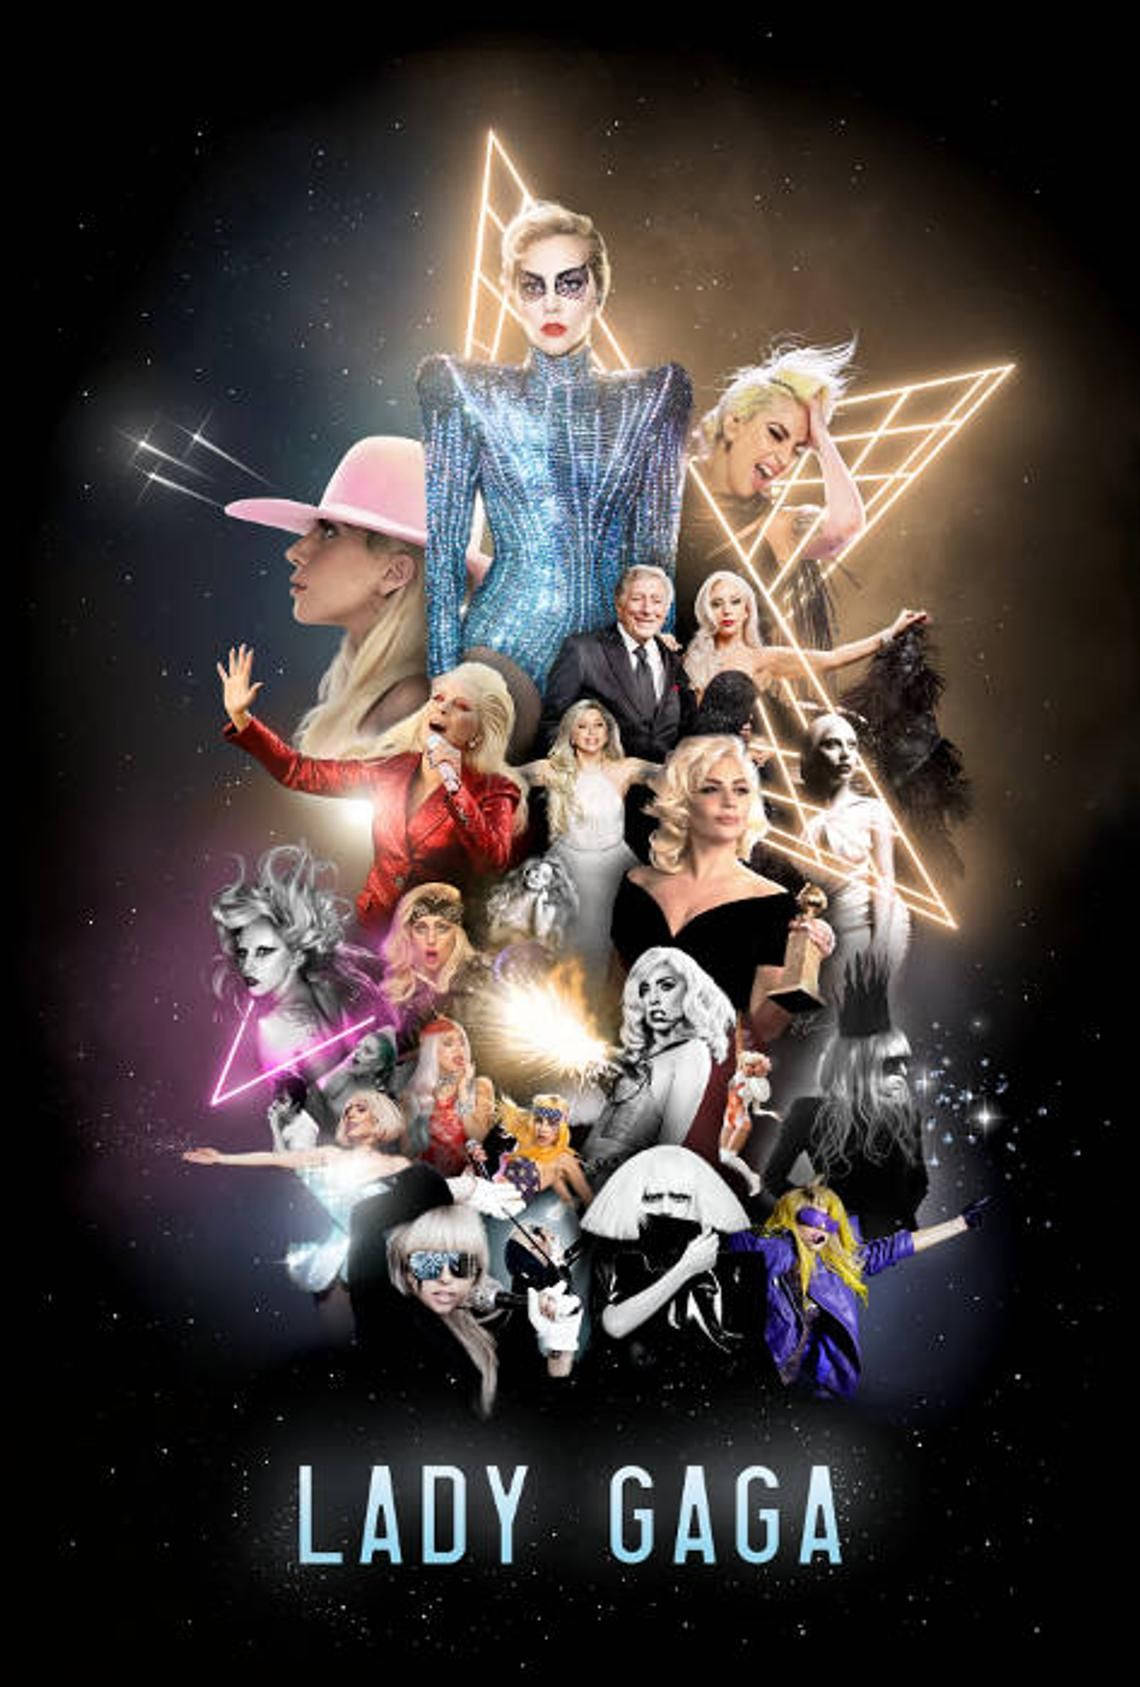 Lady Gaga Eras Collage